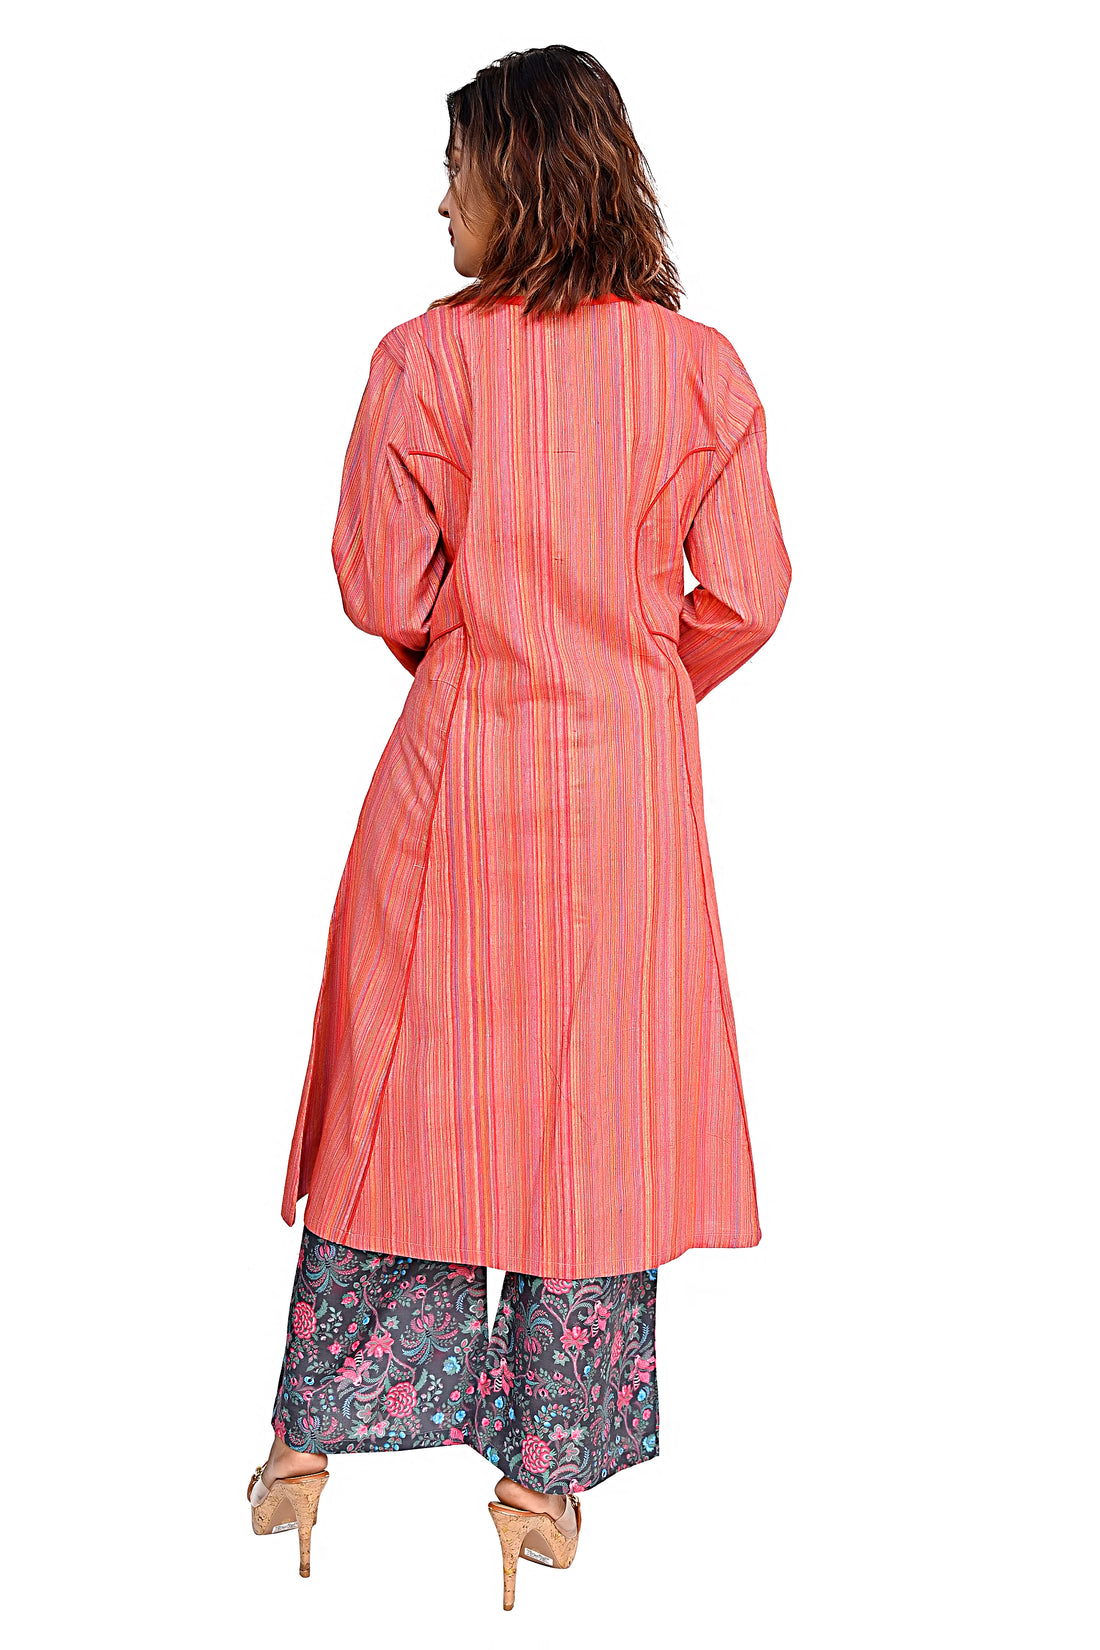 Nirmal Online Premium Cotton co-ord set for Women in Red Colour Stripe